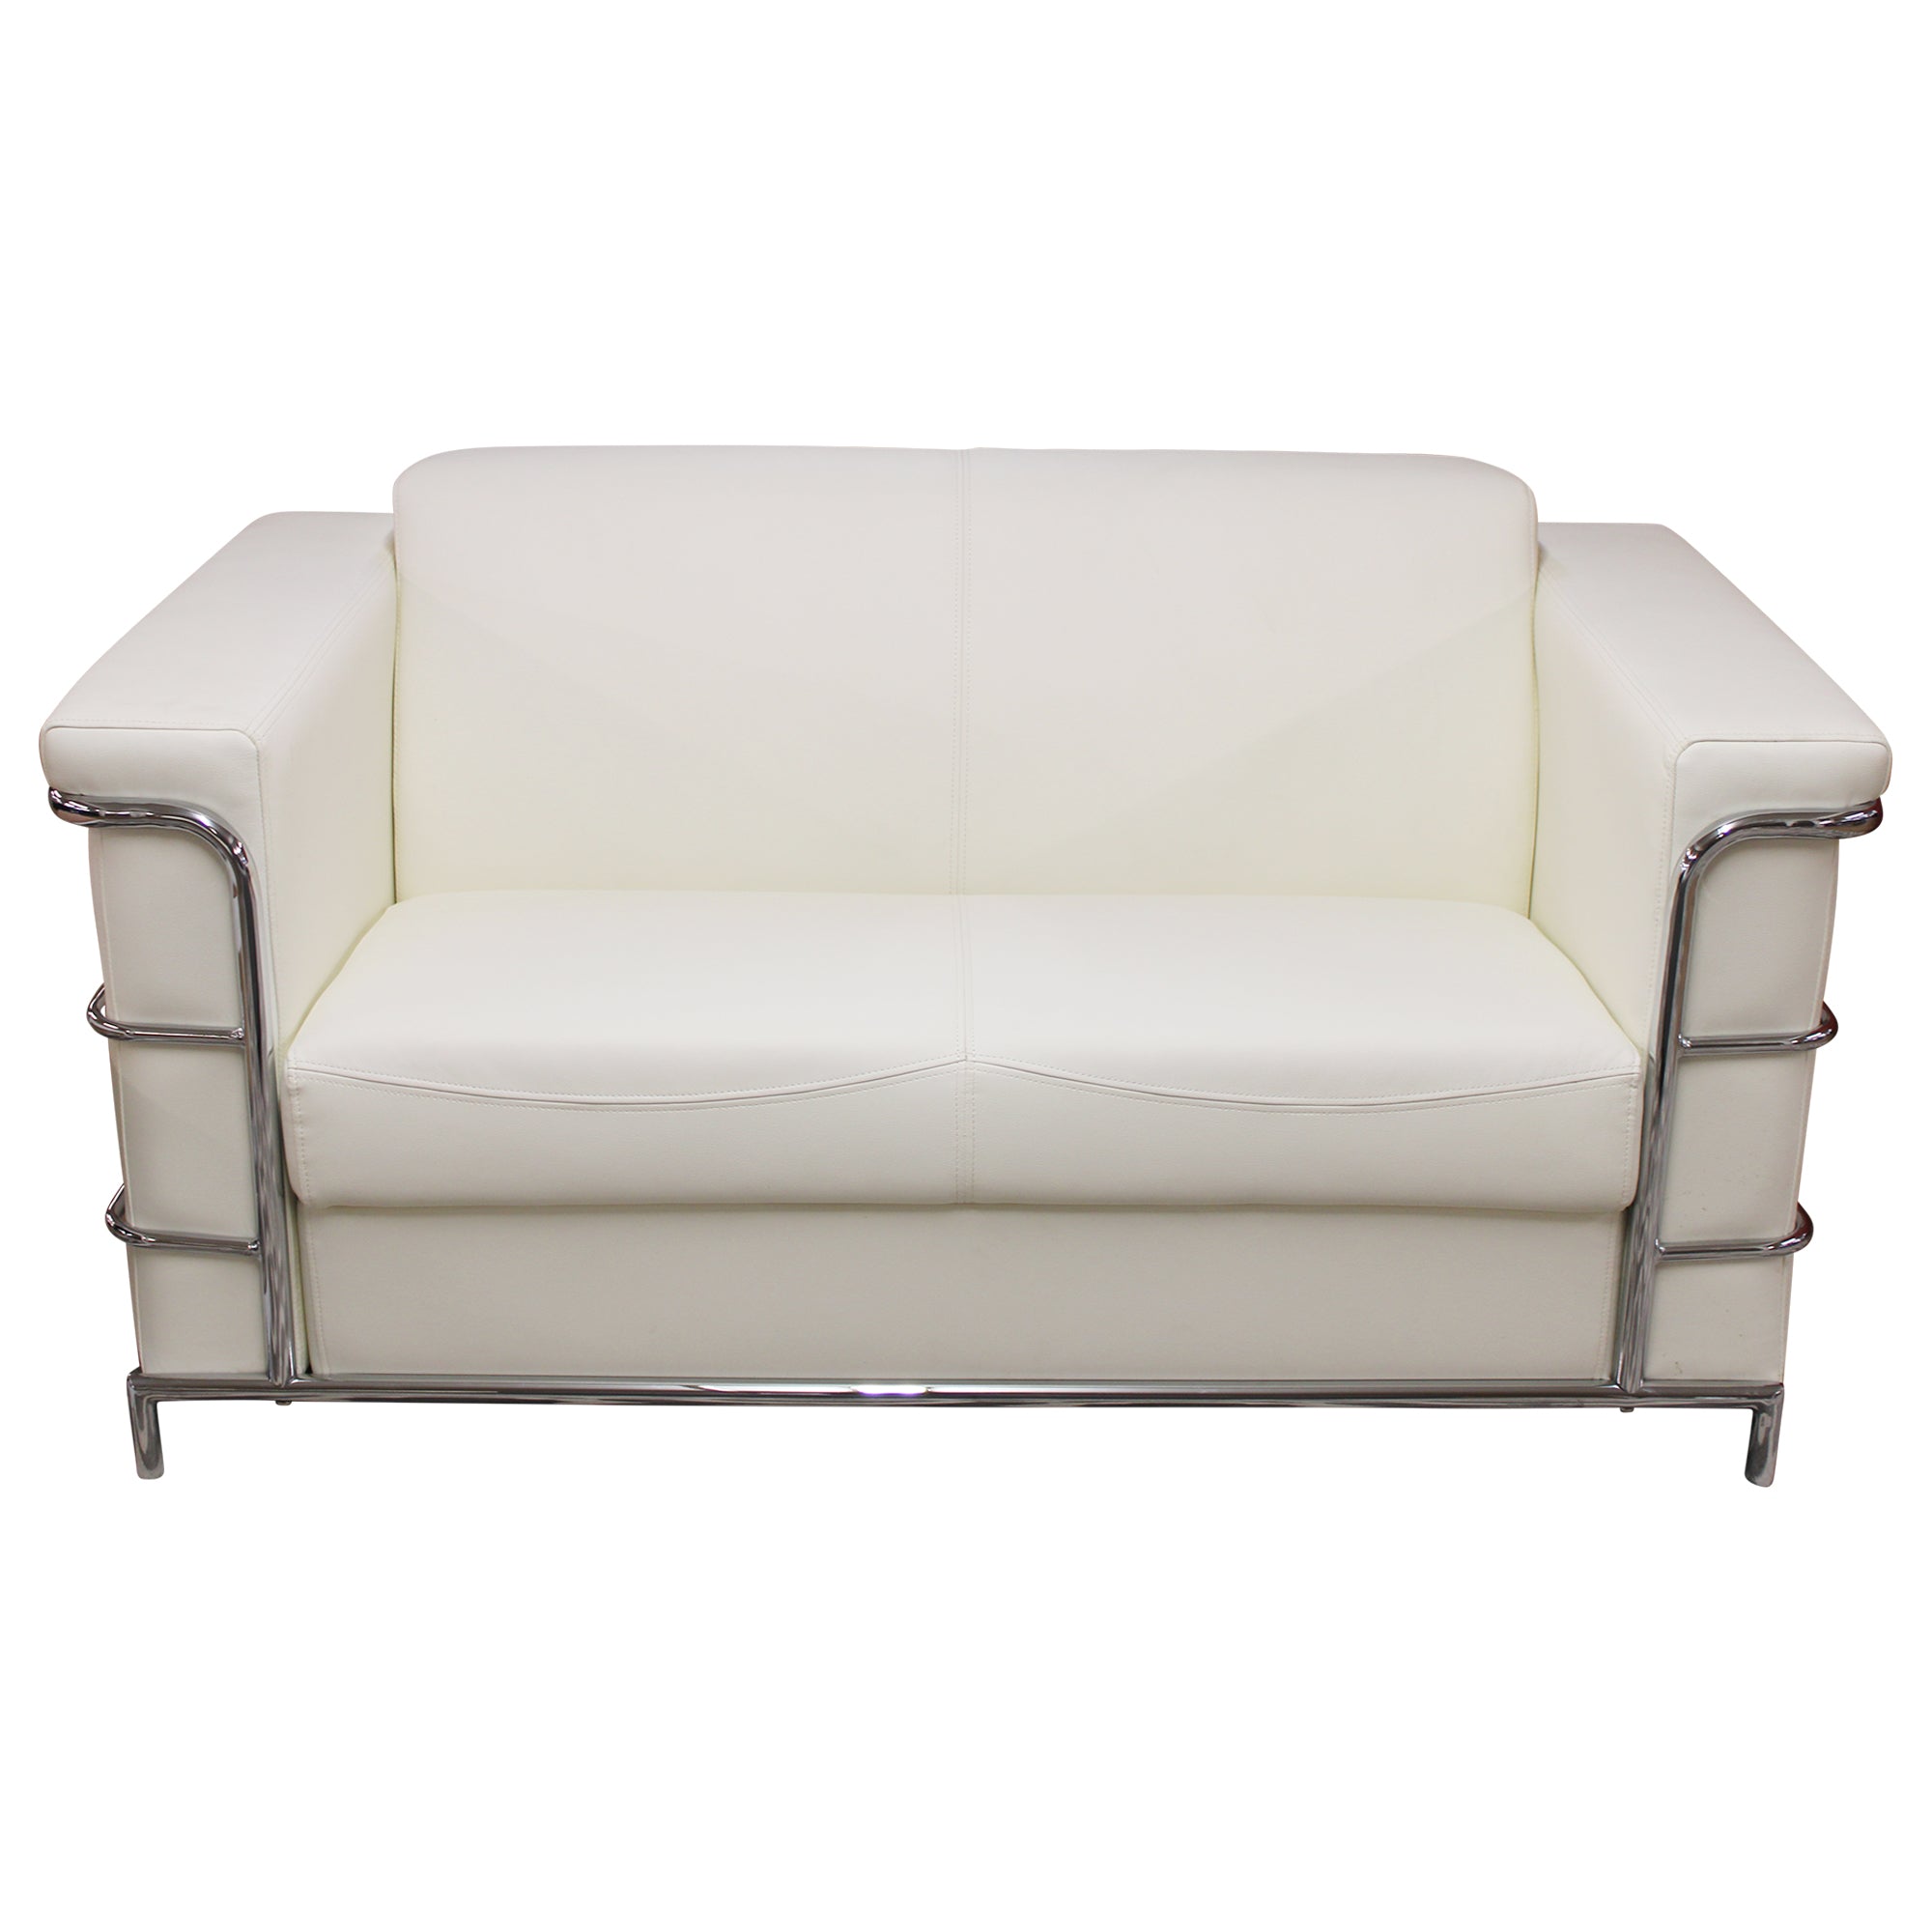 Compel Zia Lounge 2 Seat Sofa, White - New CLOSEOUT